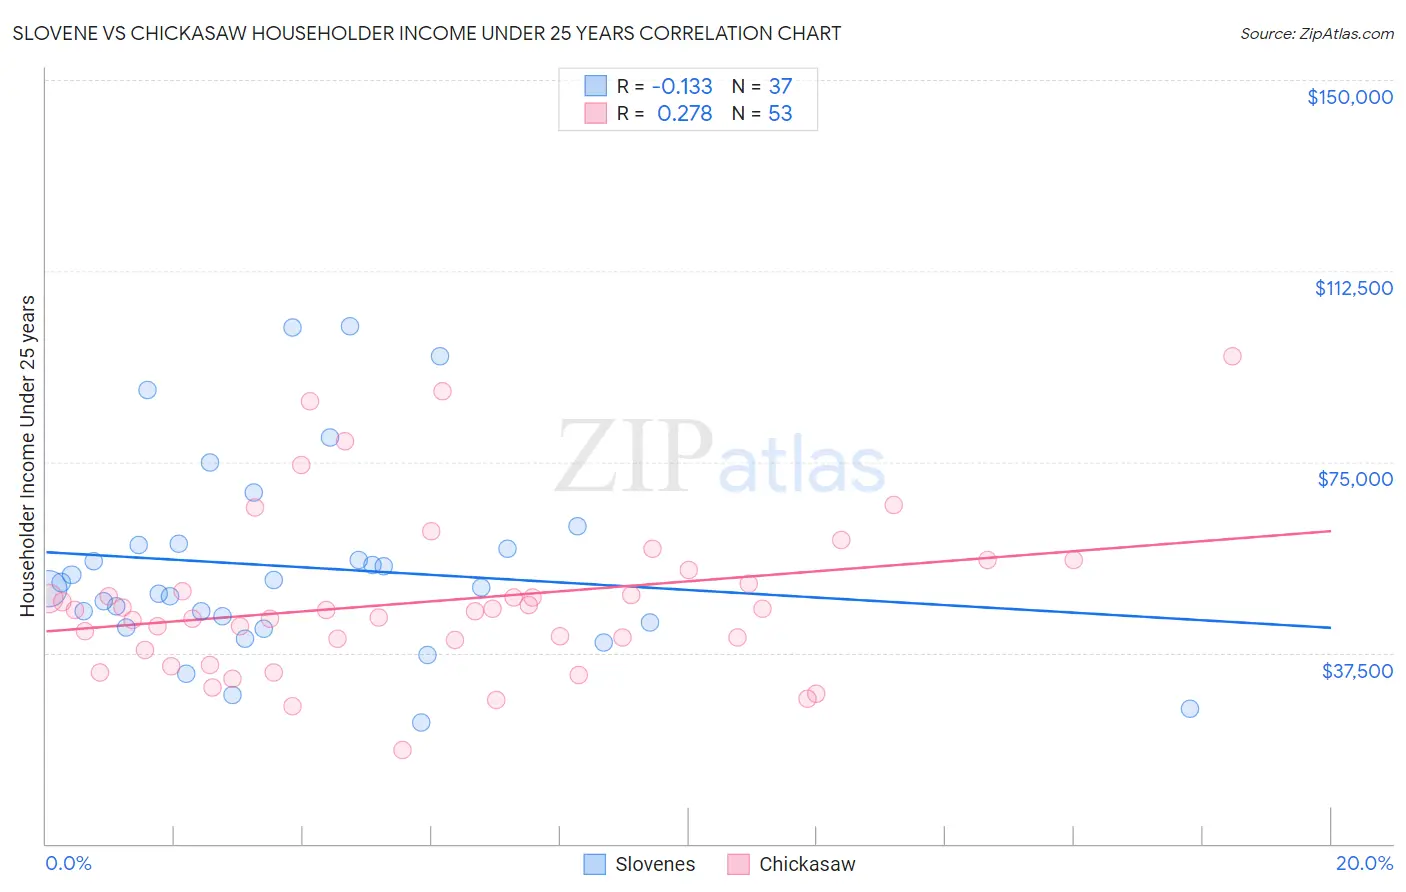 Slovene vs Chickasaw Householder Income Under 25 years